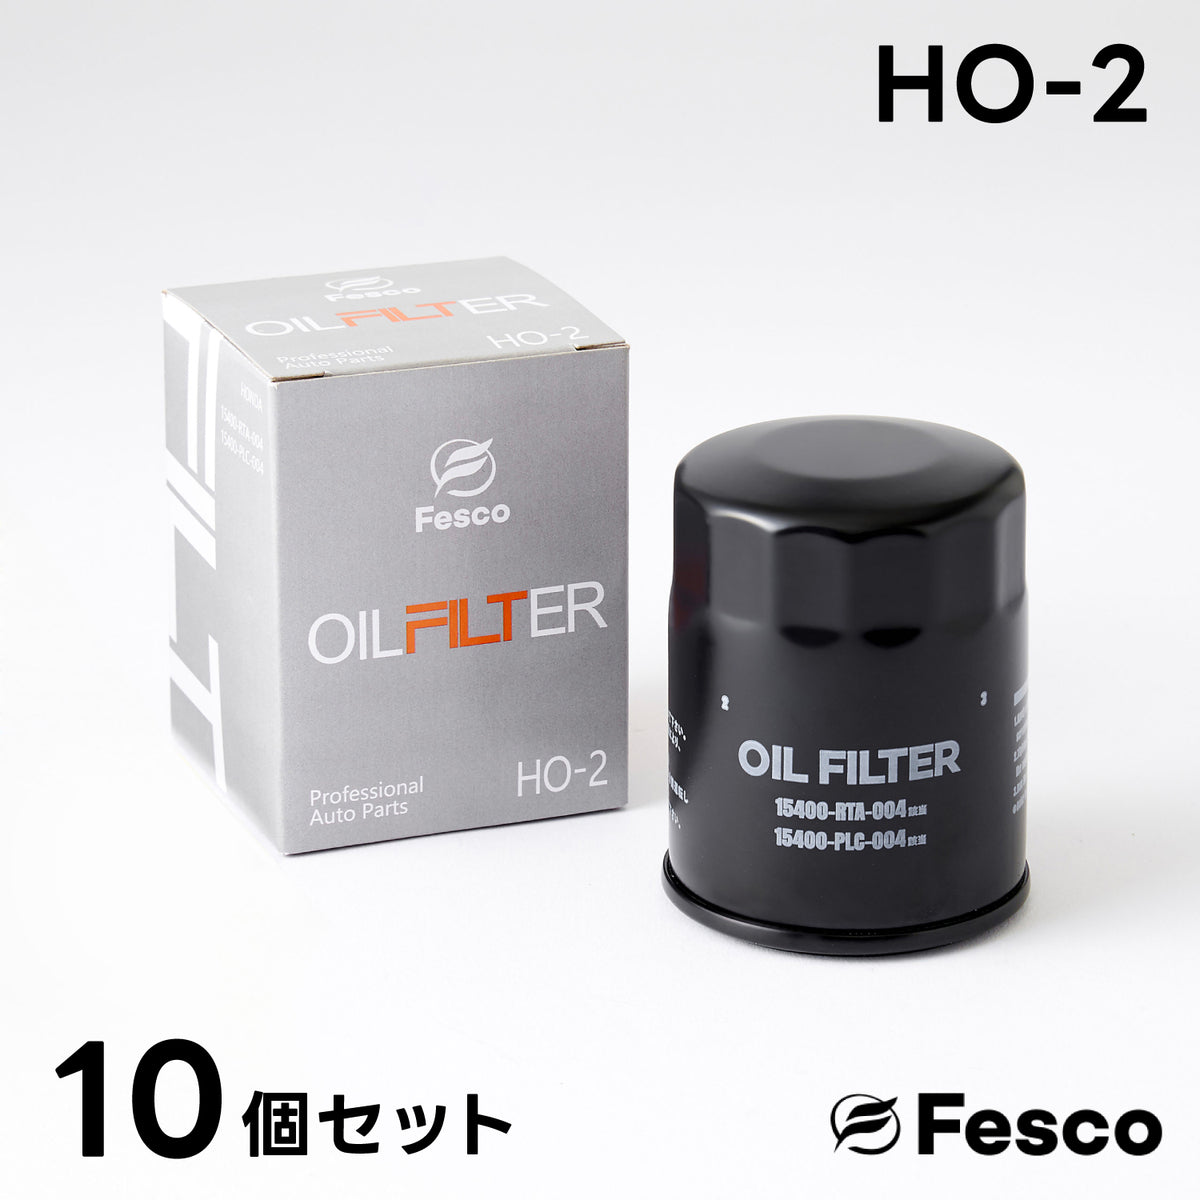 HO-2 オイルフィルター ホンダ オイルエレメント FESCO 15400-RTA-003 15400-RTA-004 FESCO（フェスコ）